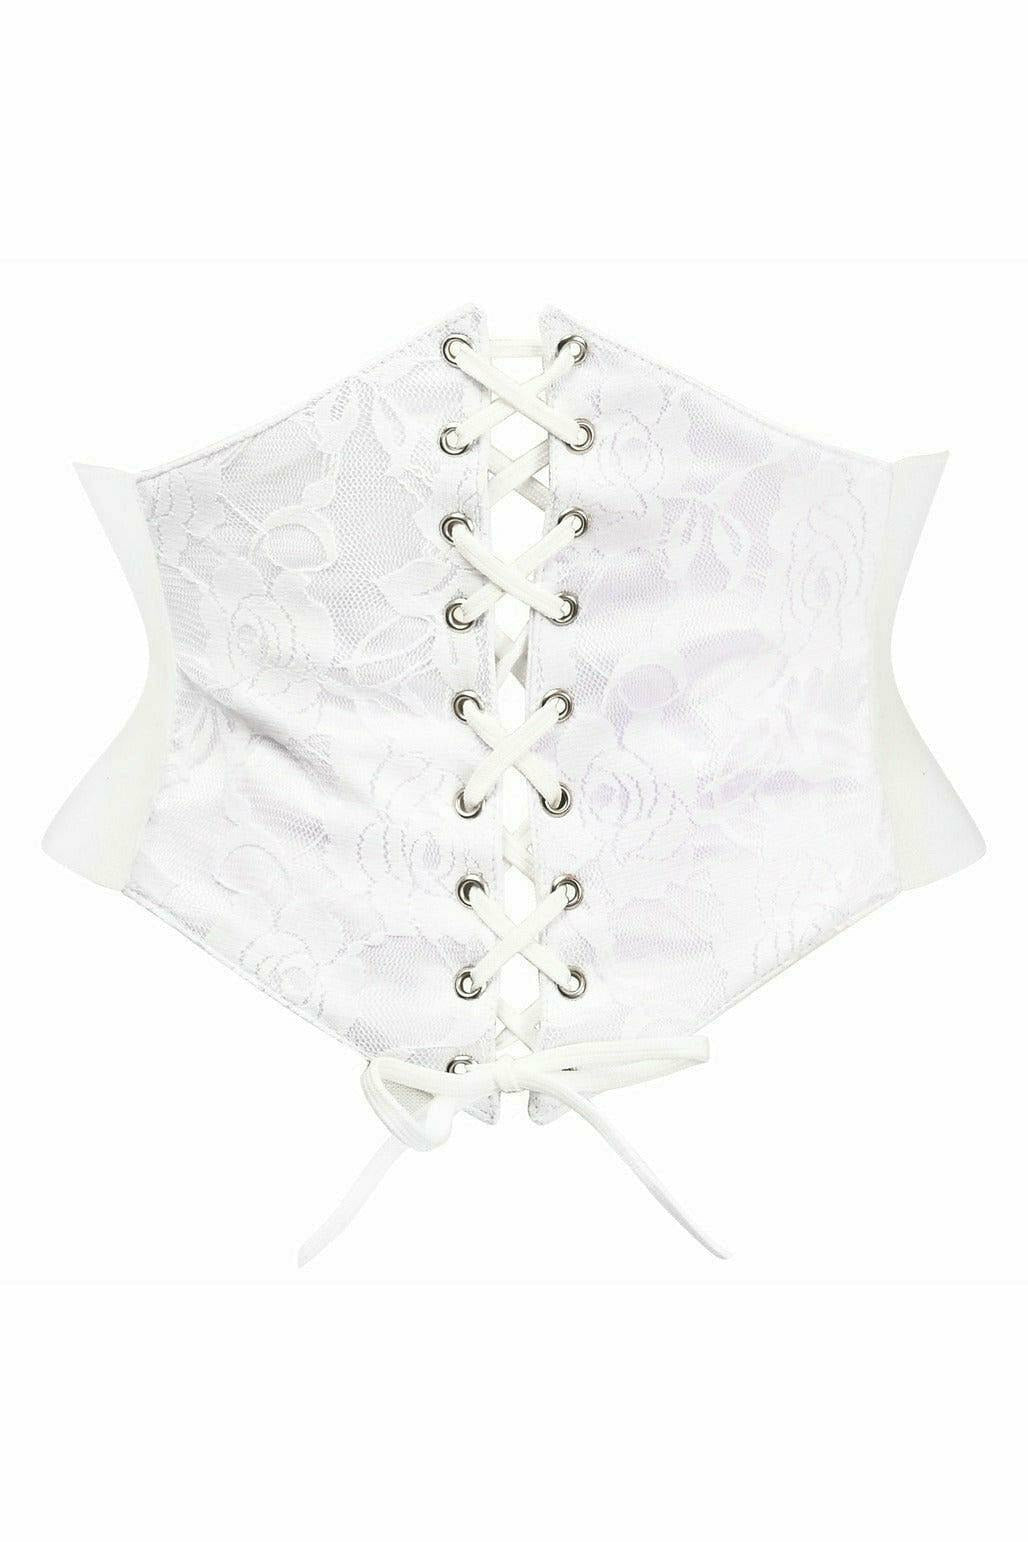 Daisy Corsets Lavish White Lace Corset Belt Cincher